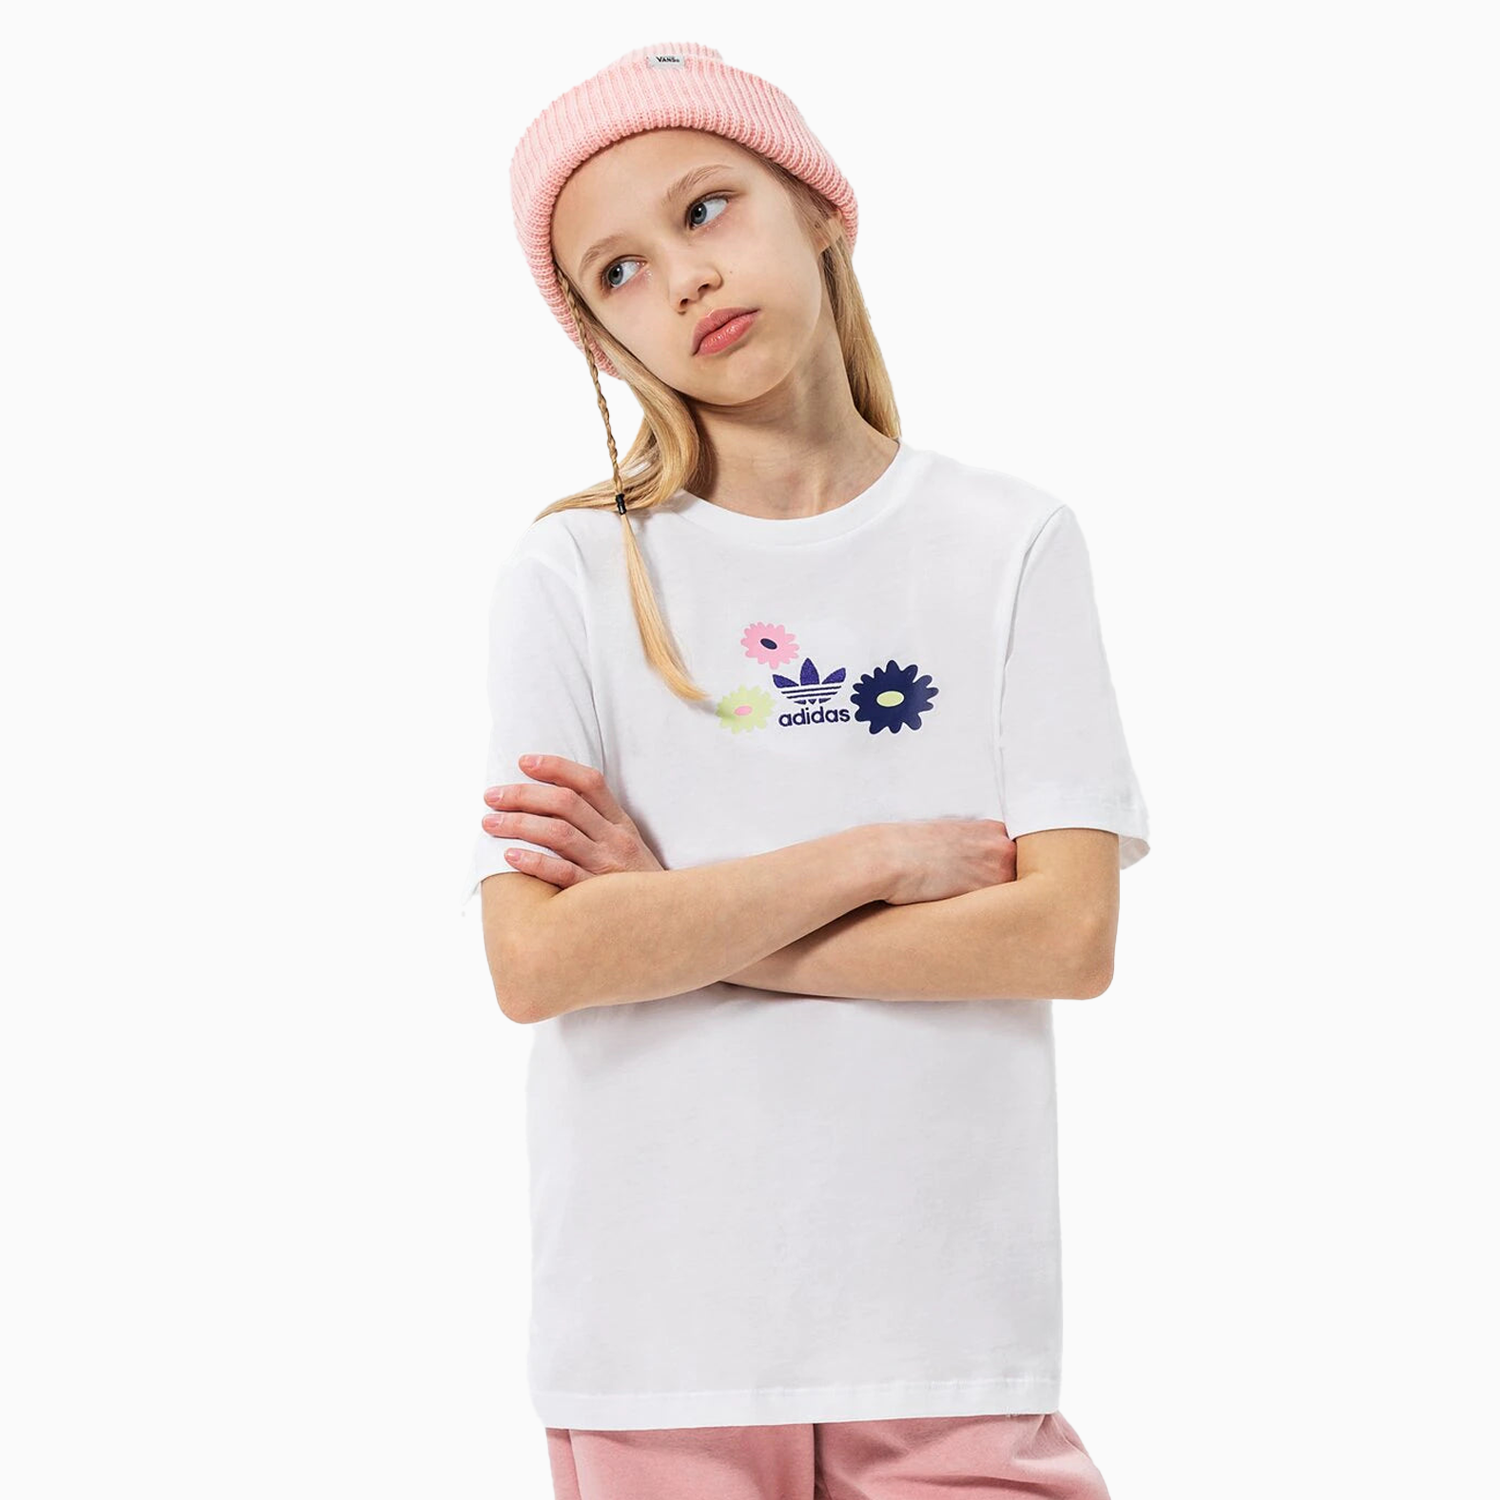 adidas-kids-flower-print-t-shirt-hf7467